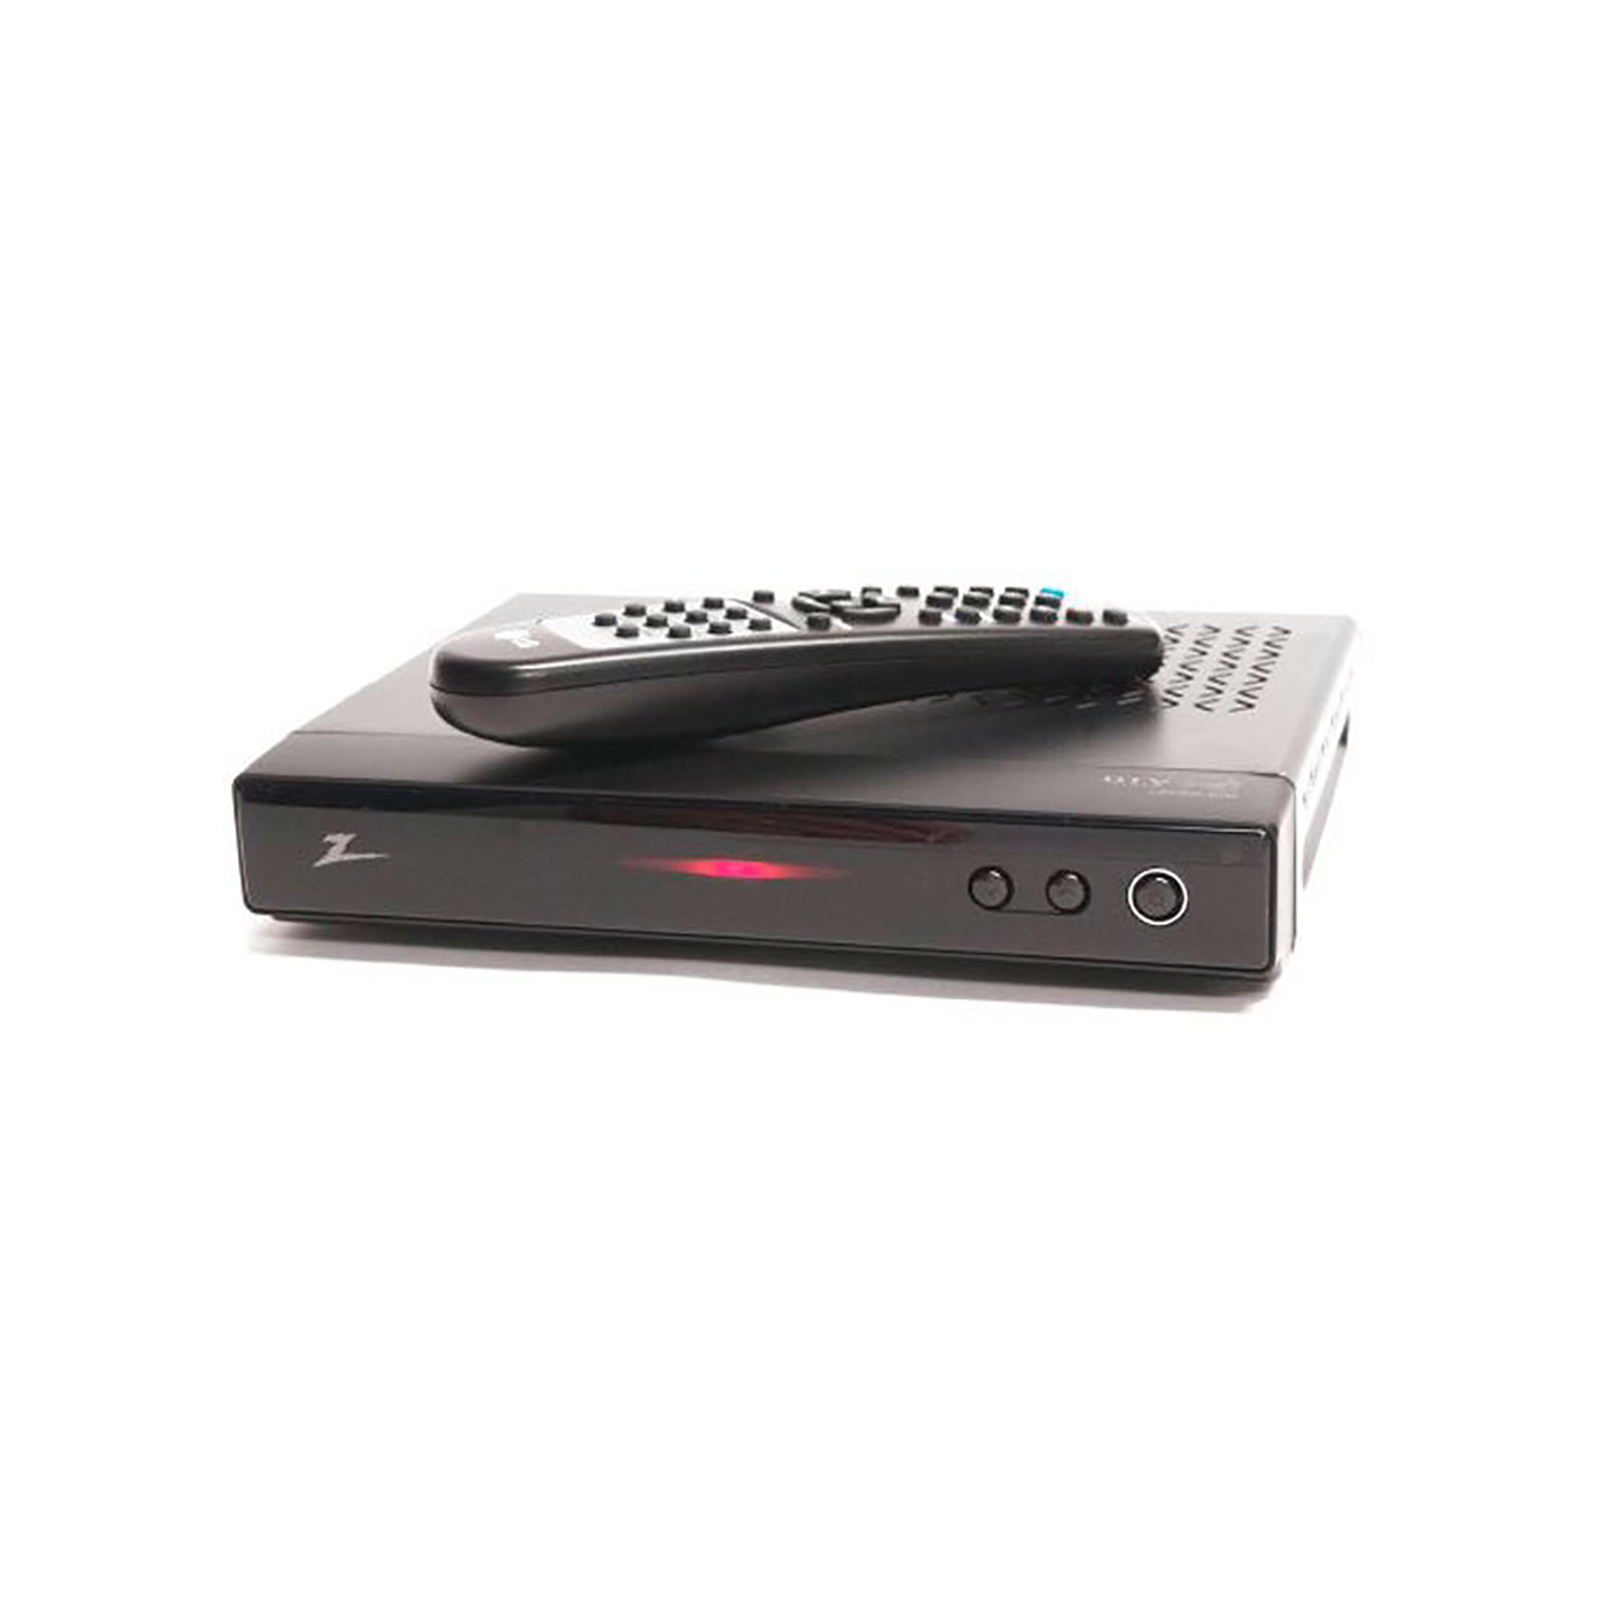 Zenith DTT900  Digital Tuner TV Converter Box